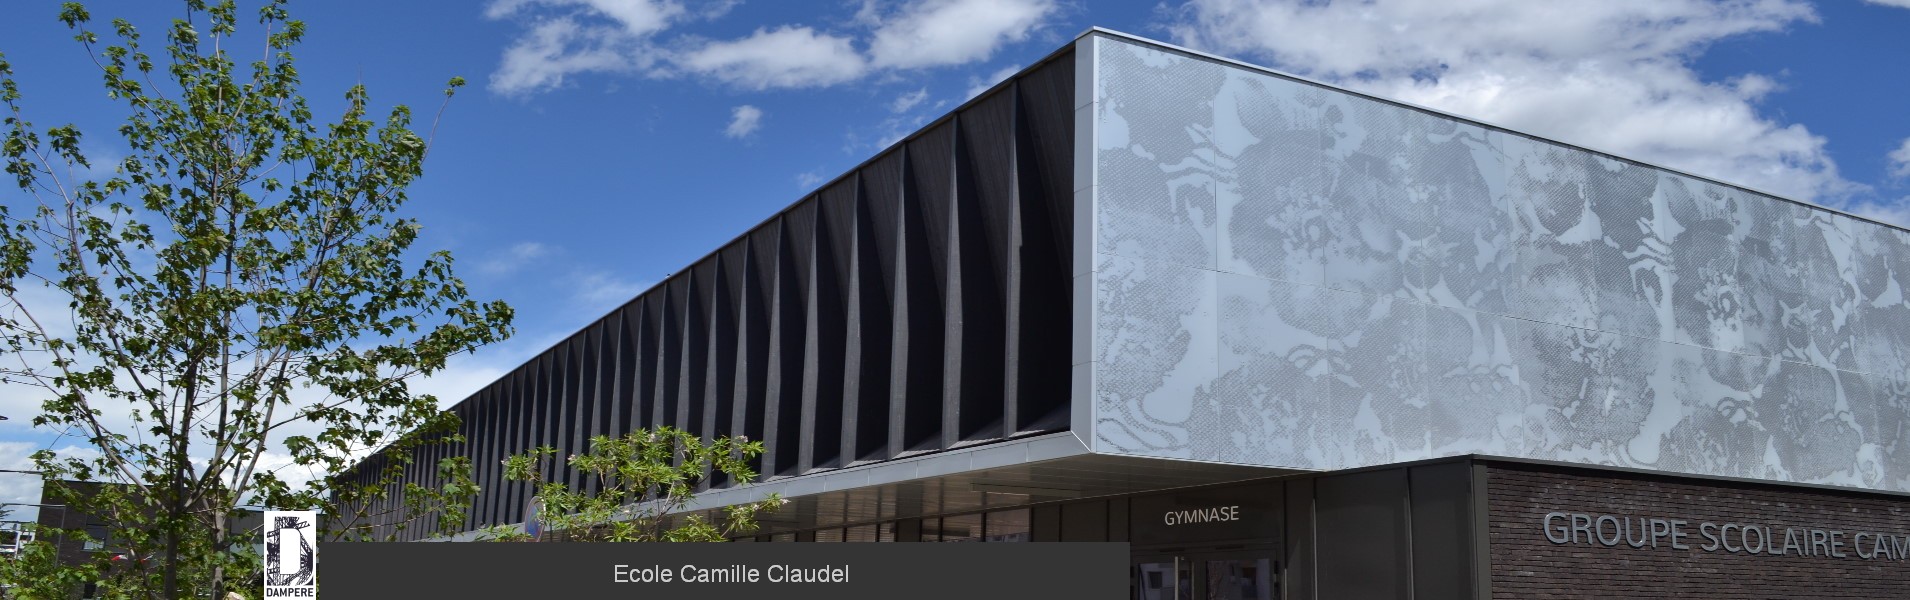 Ecole Camille Claudel 1